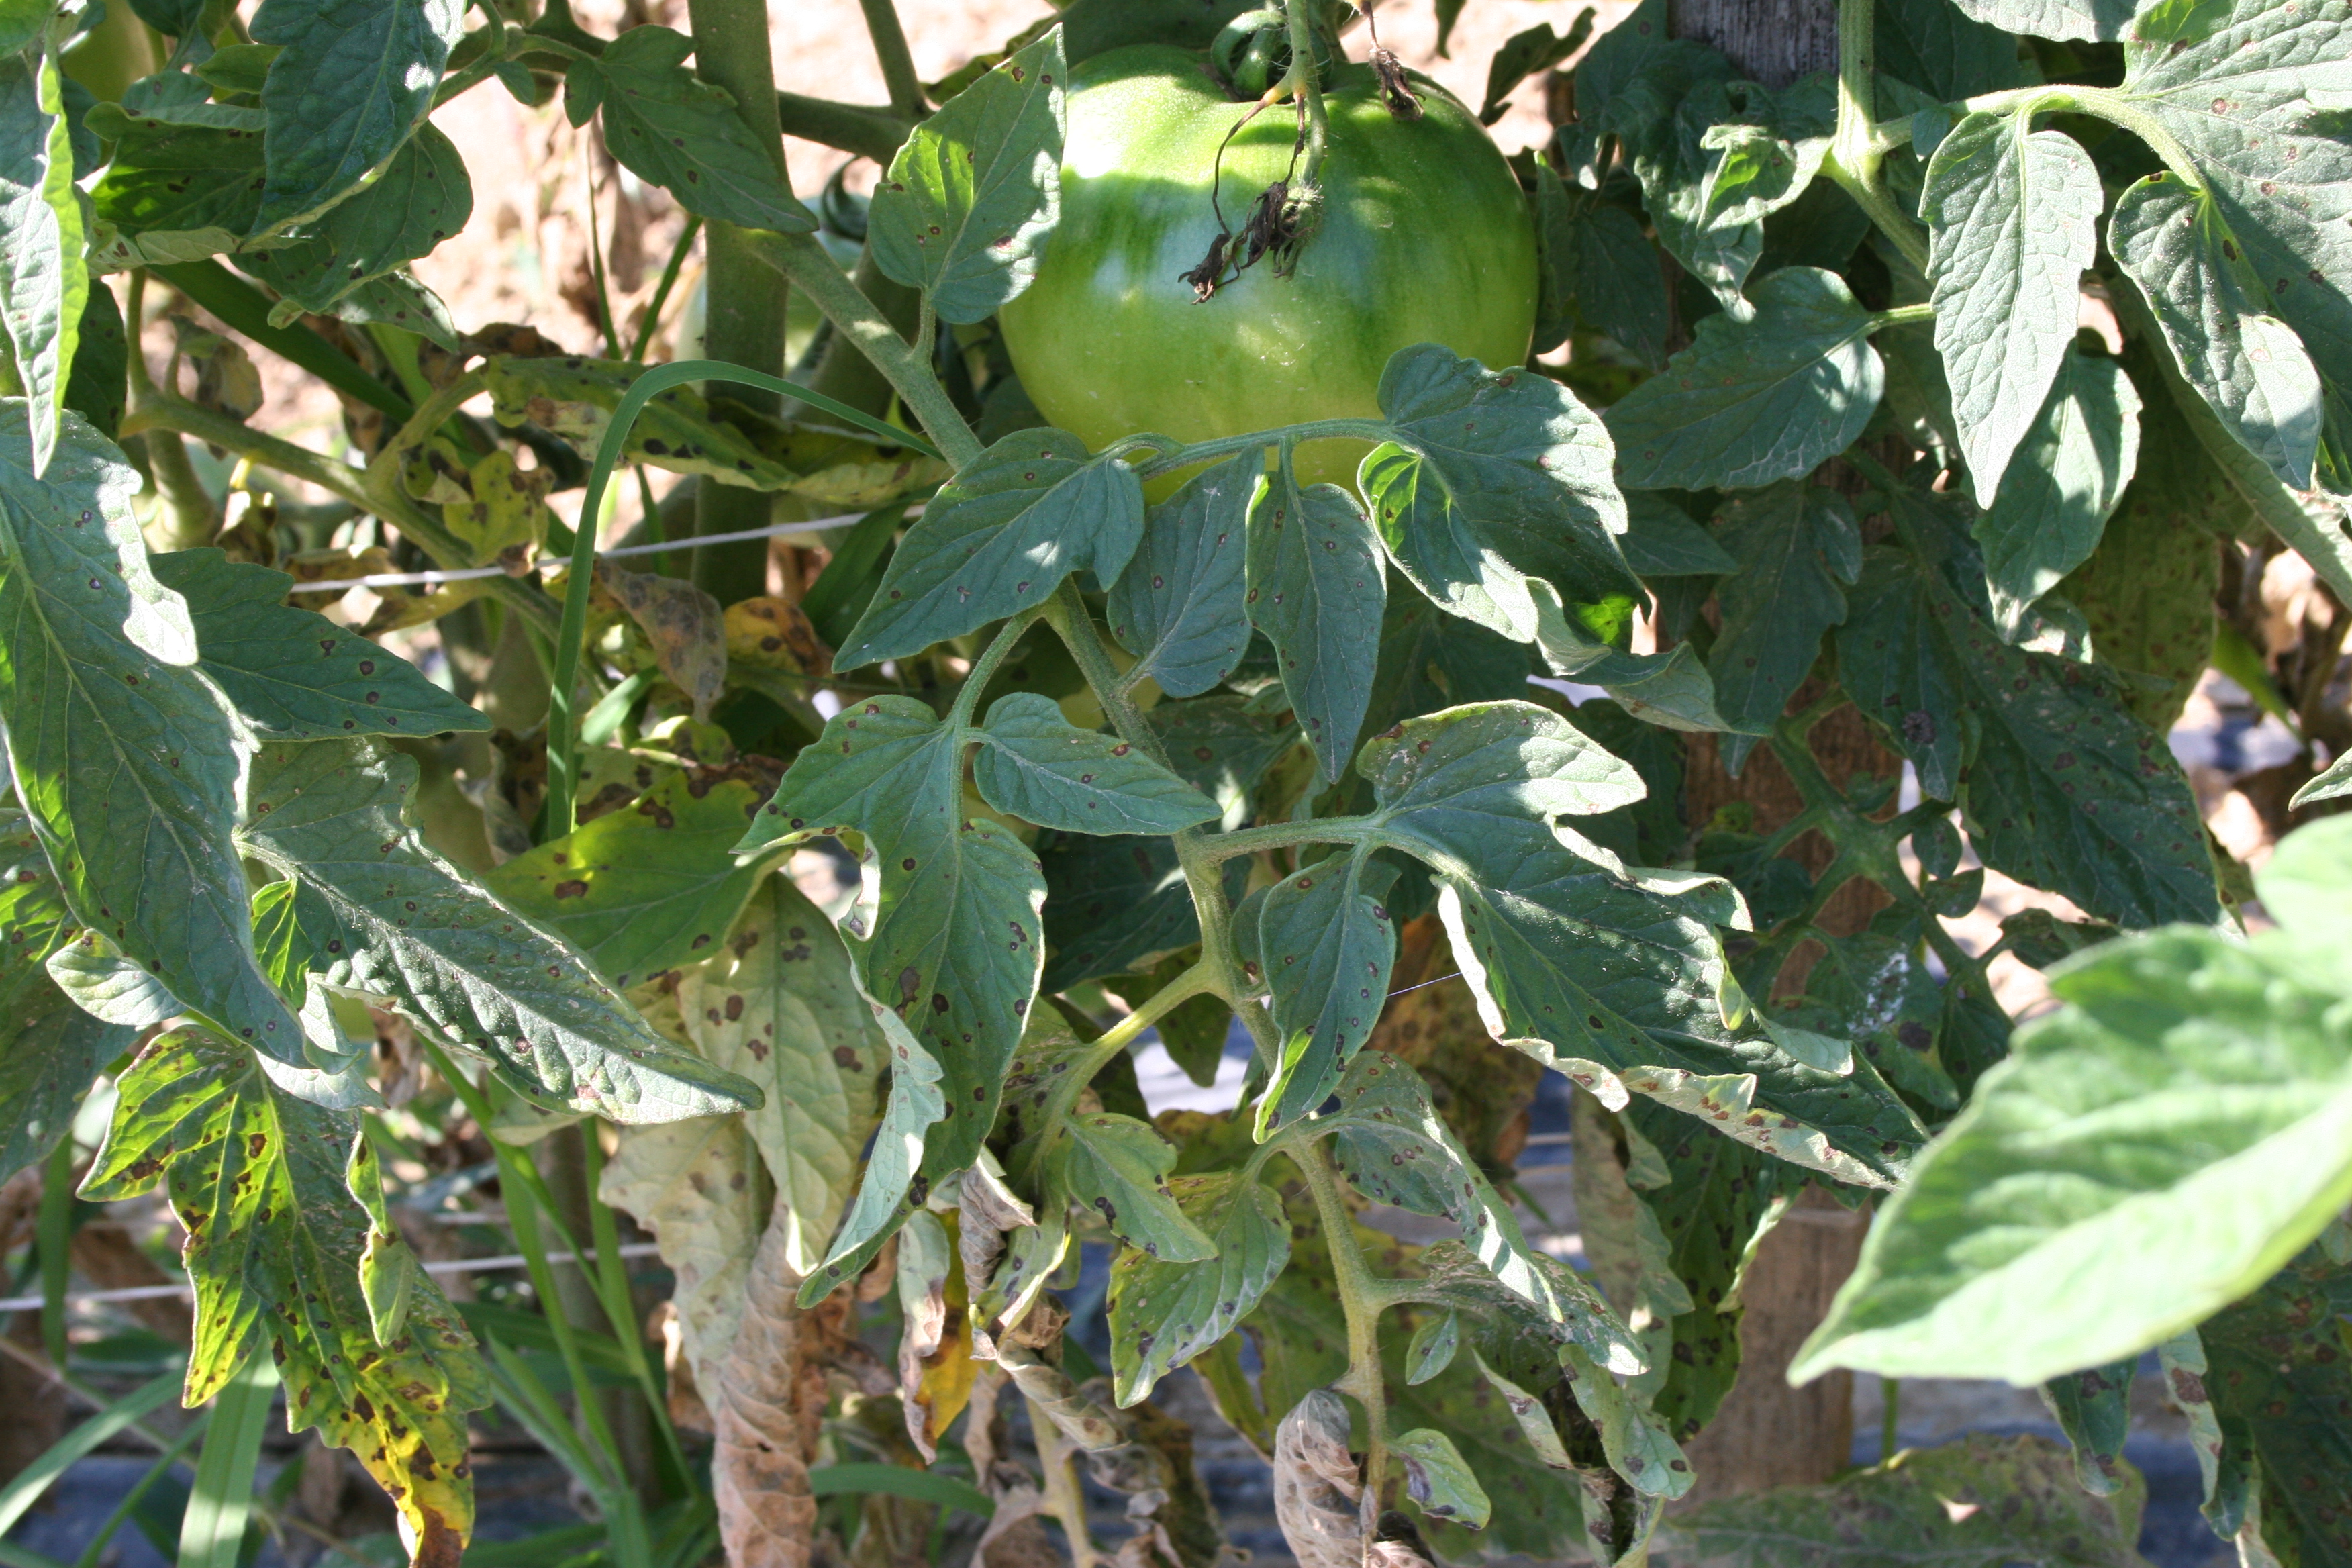 Septoria leaf spot on tomato foliage in planting.